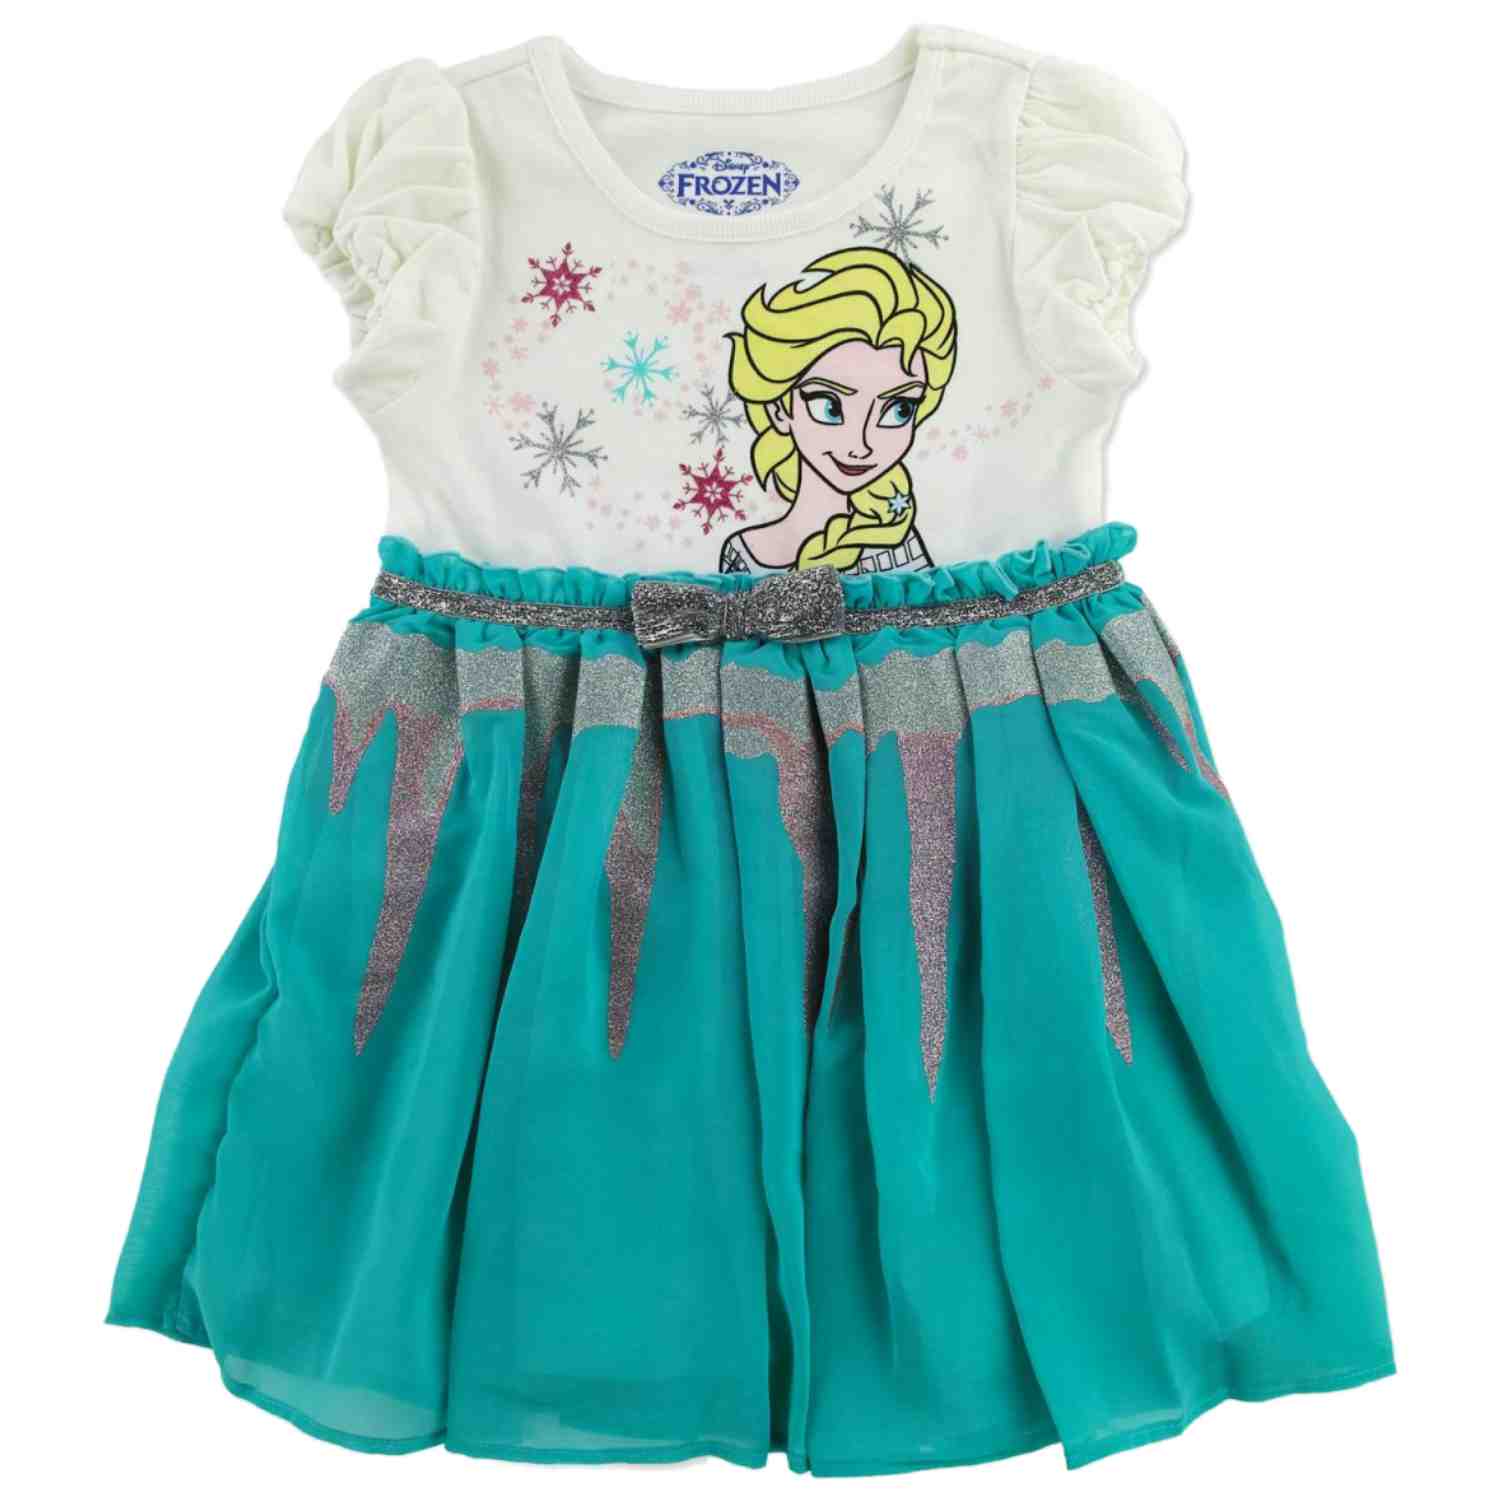 Disney Girls Frozen Princess Elsa Glittery Aqua Green Short Sleeve Dress 5 - image 1 of 1